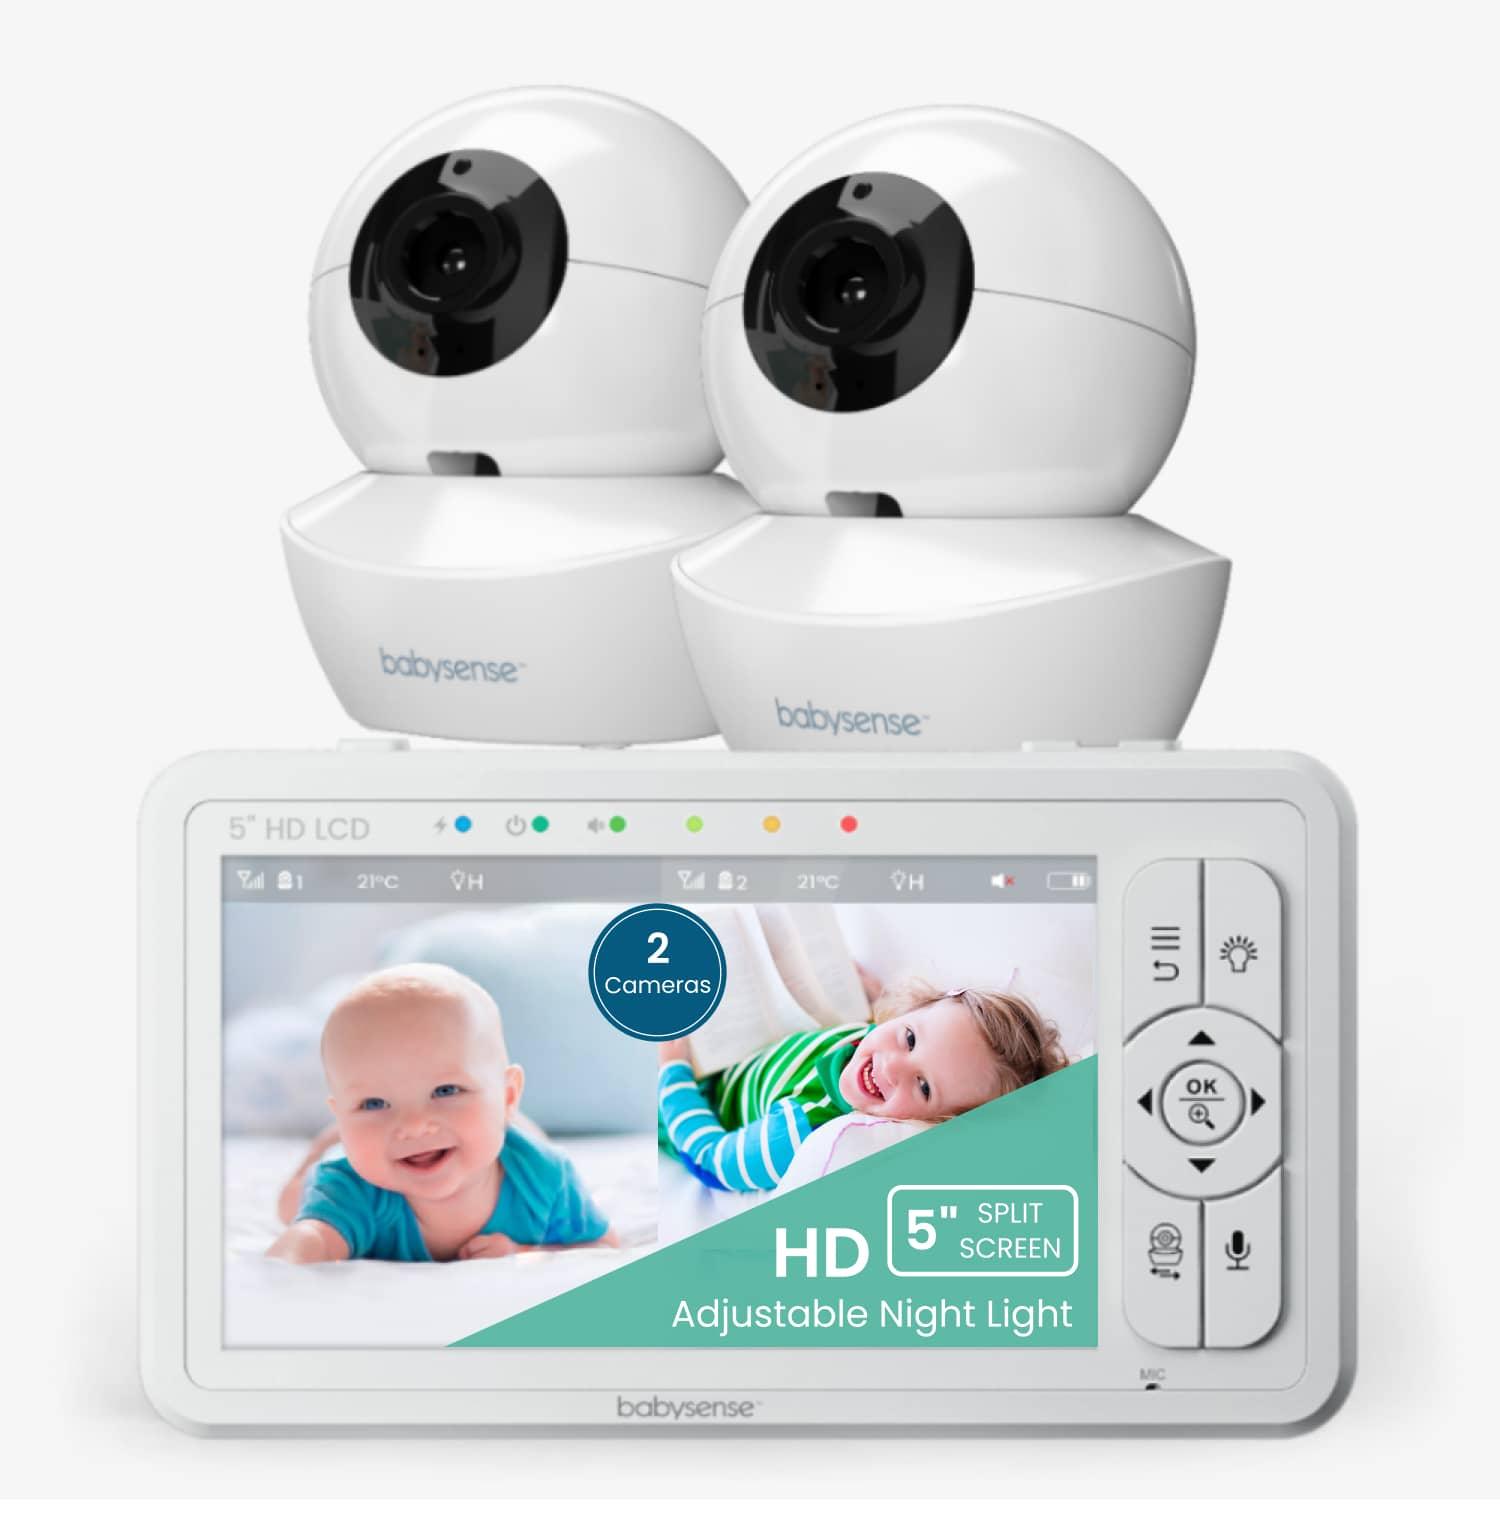 Babysense 5 HD Split Screen Video Baby Monitor, 2 Cameras, Night Light, Non-wifi, Pan Tilt Zoom, HD S2